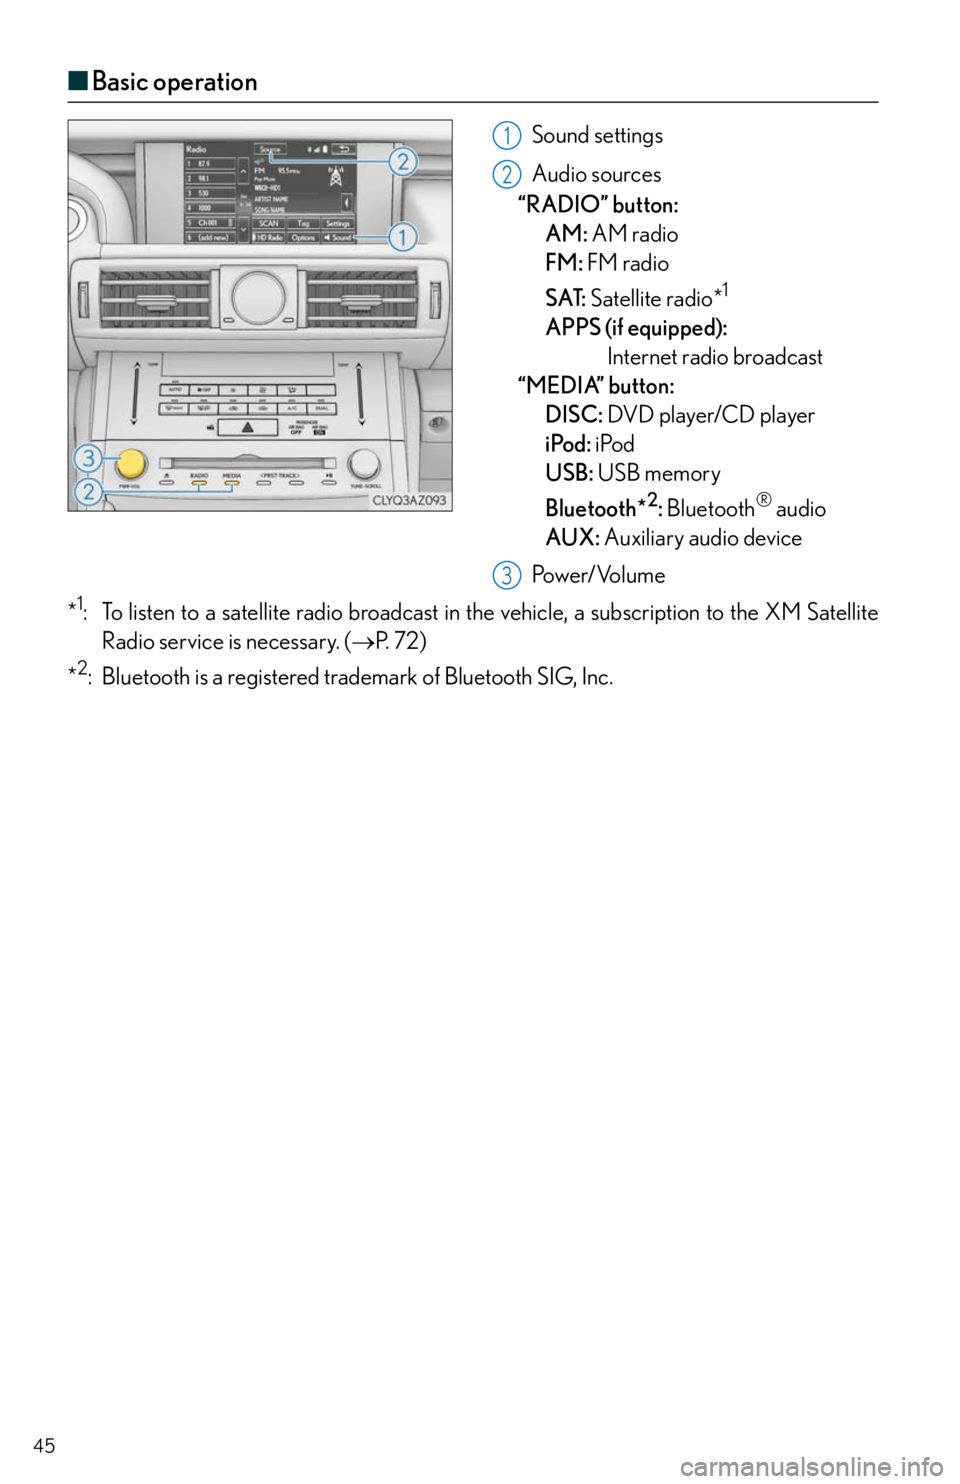 Lexus IS250 2014  Do-it-yourself service precautions / LEXUS 2014 IS250,IS350 QUICK GUIDE  (OM53B33U) Service Manual 45
■Basic operation
Sound settings
Audio sources
“RADIO” button: 
AM: AM radio
FM: FM radio
SAT: Satellite radio*
1
APPS (if equipped): 
Internet radio broadcast
“MEDIA” button: 
DISC: DV